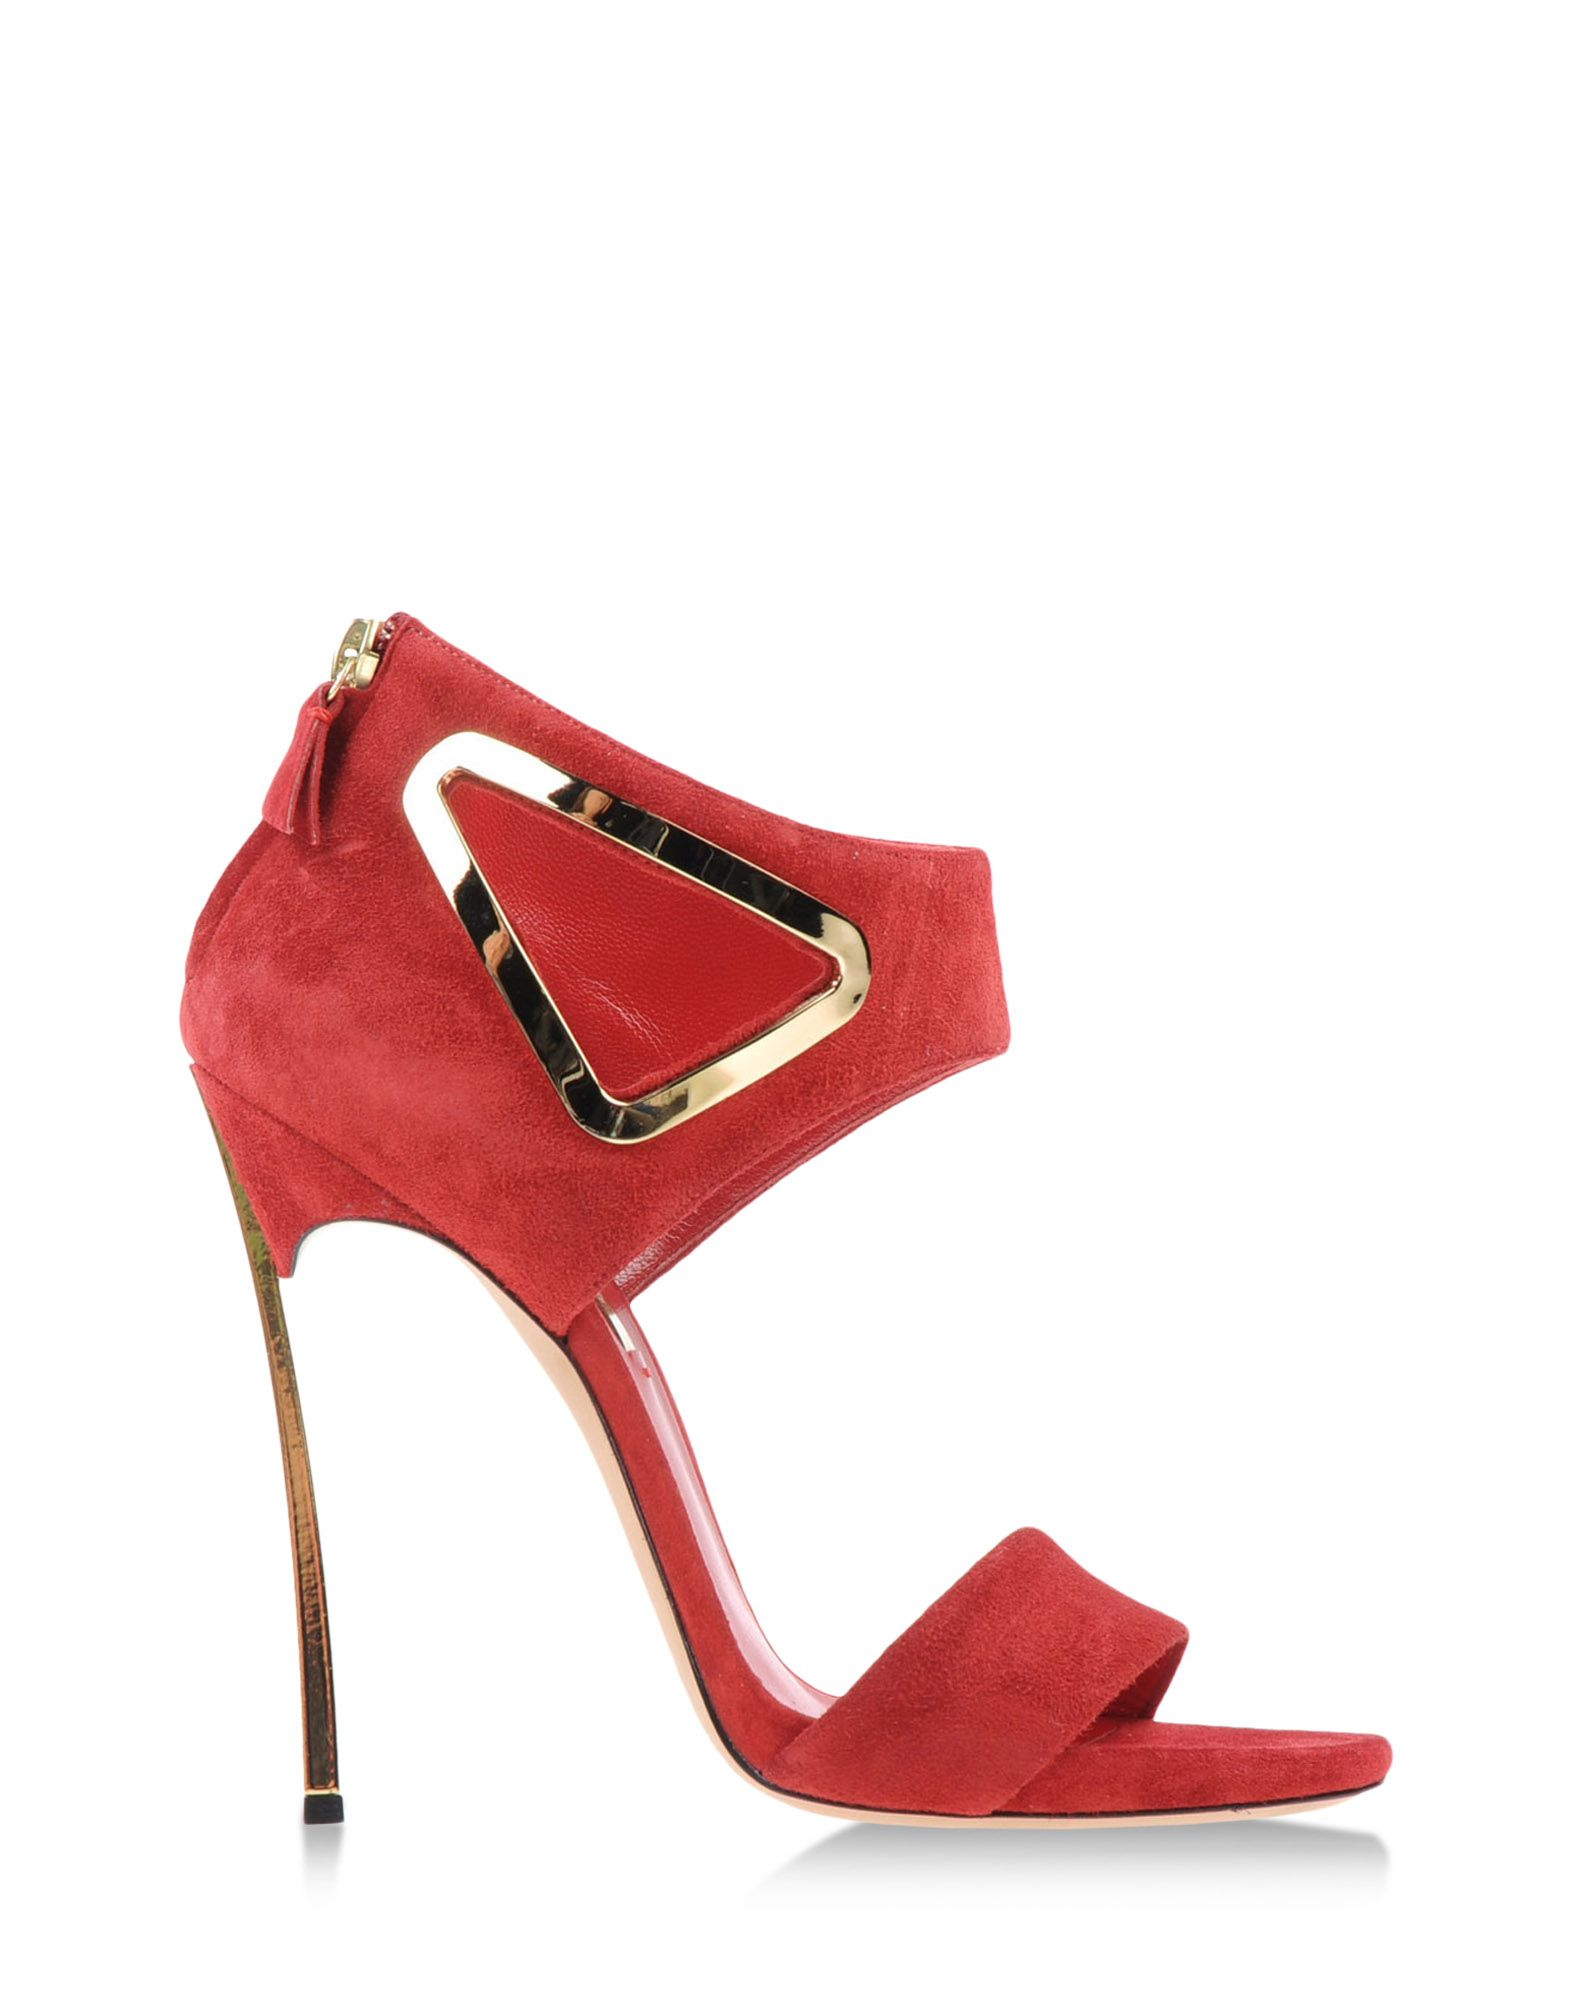 Casadei Sandals in Brick Red (Red) - Lyst